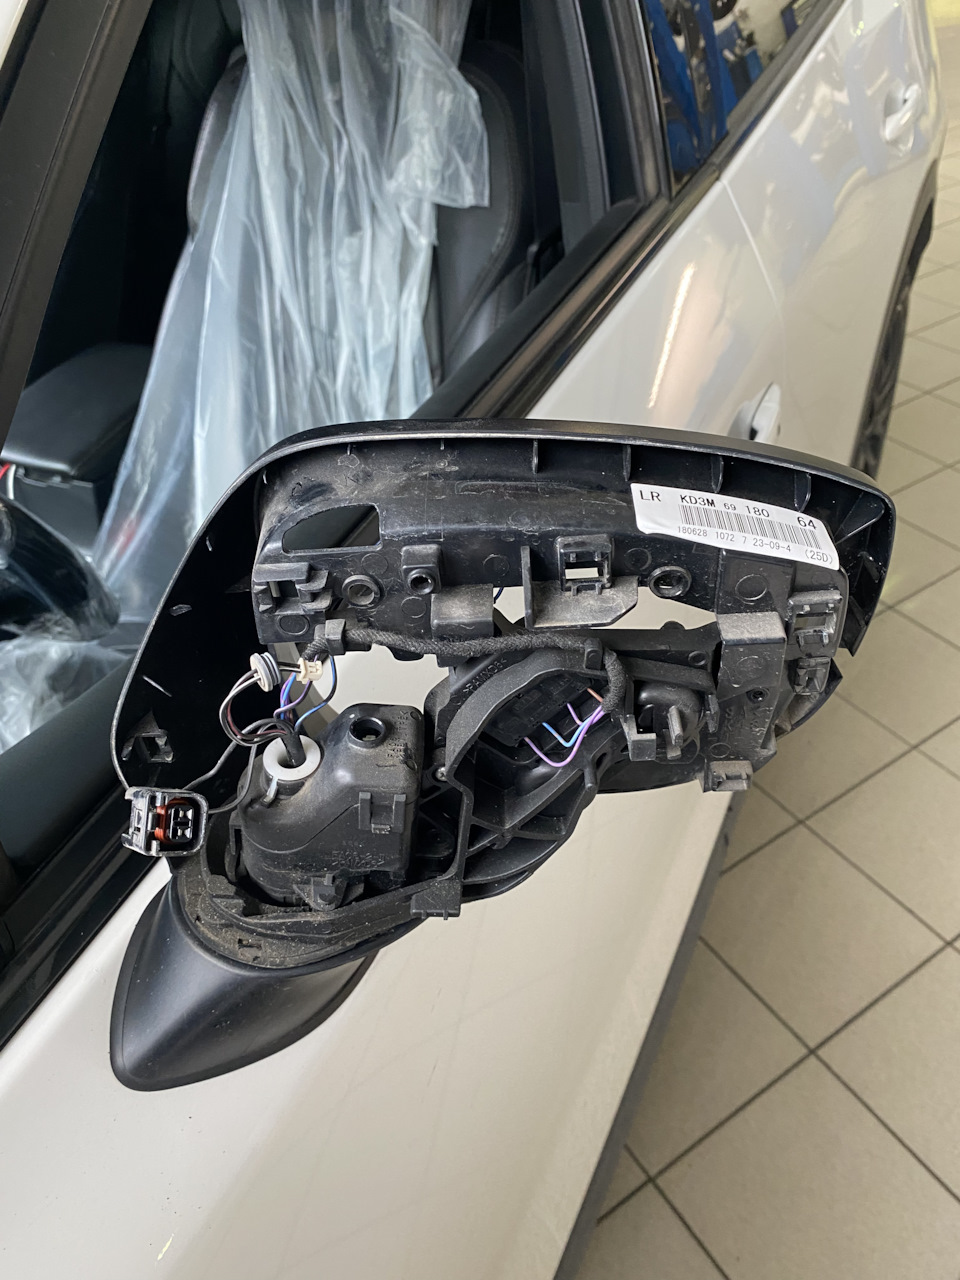 Складывание зеркал мазда 6. Механизм складывания зеркала Mazda CX-5. Складывания зеркал Мазда цх5. Моторчик зеркала Мазда СХ-5 2014 года. Подогрев боковых зеркал Мазда сх5.